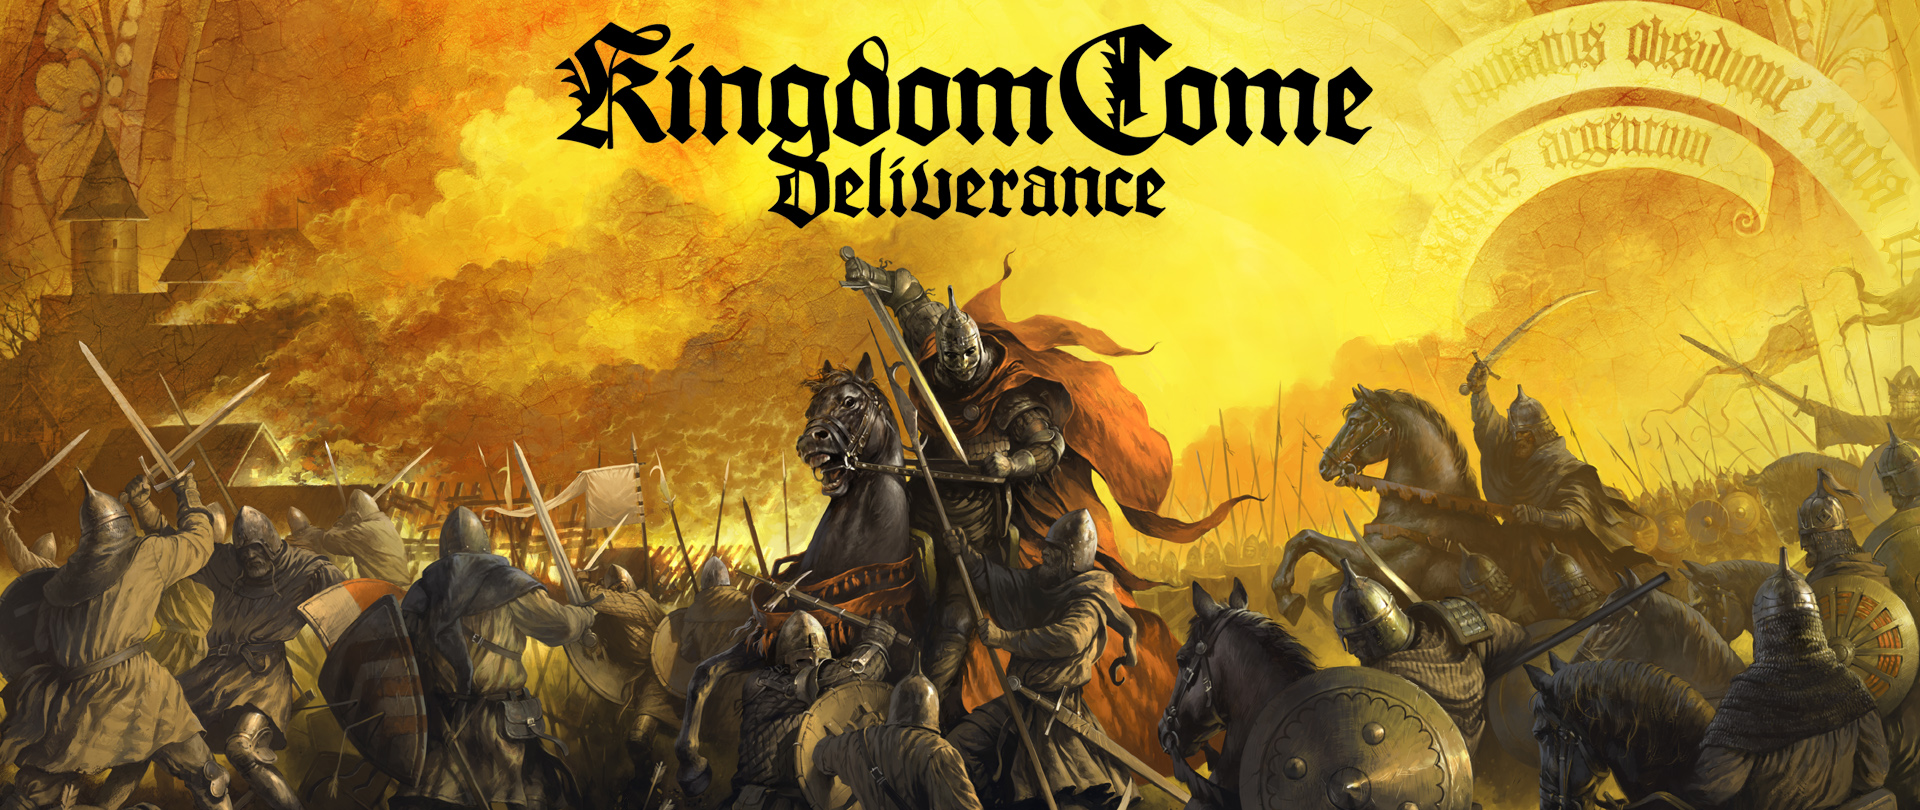 Kingdom-Come-Deliverance-Preview-01-Header.jpg